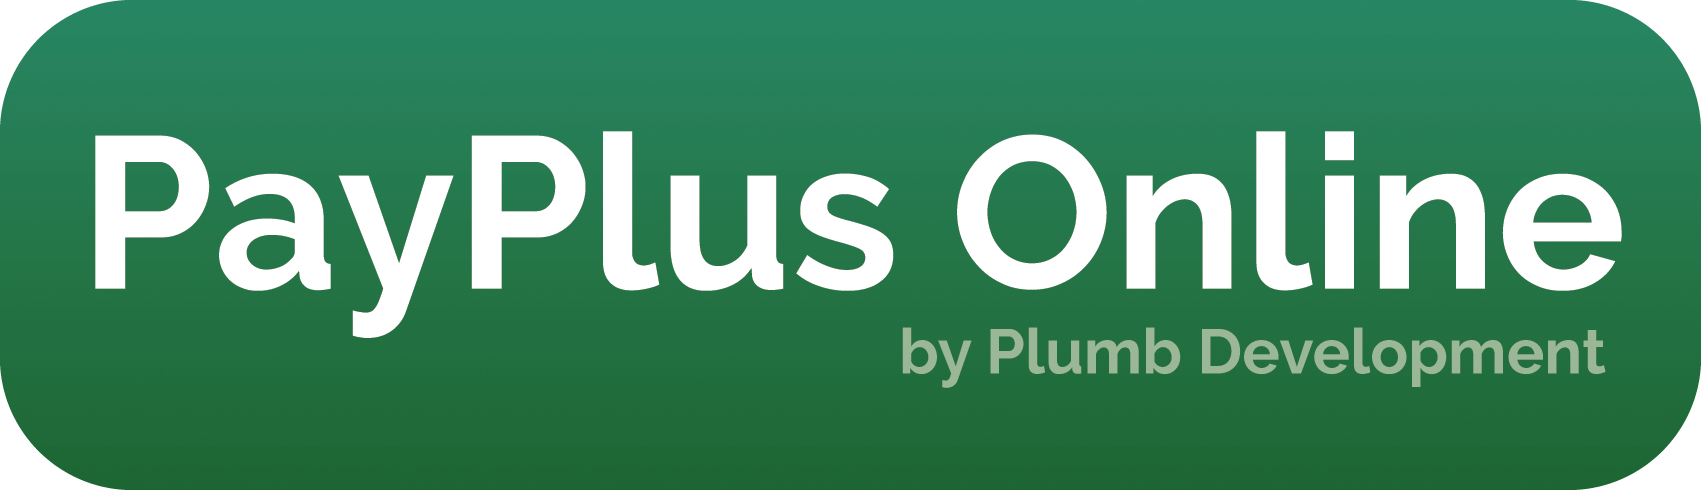 PayPlus Online Logo - online website payment software platform